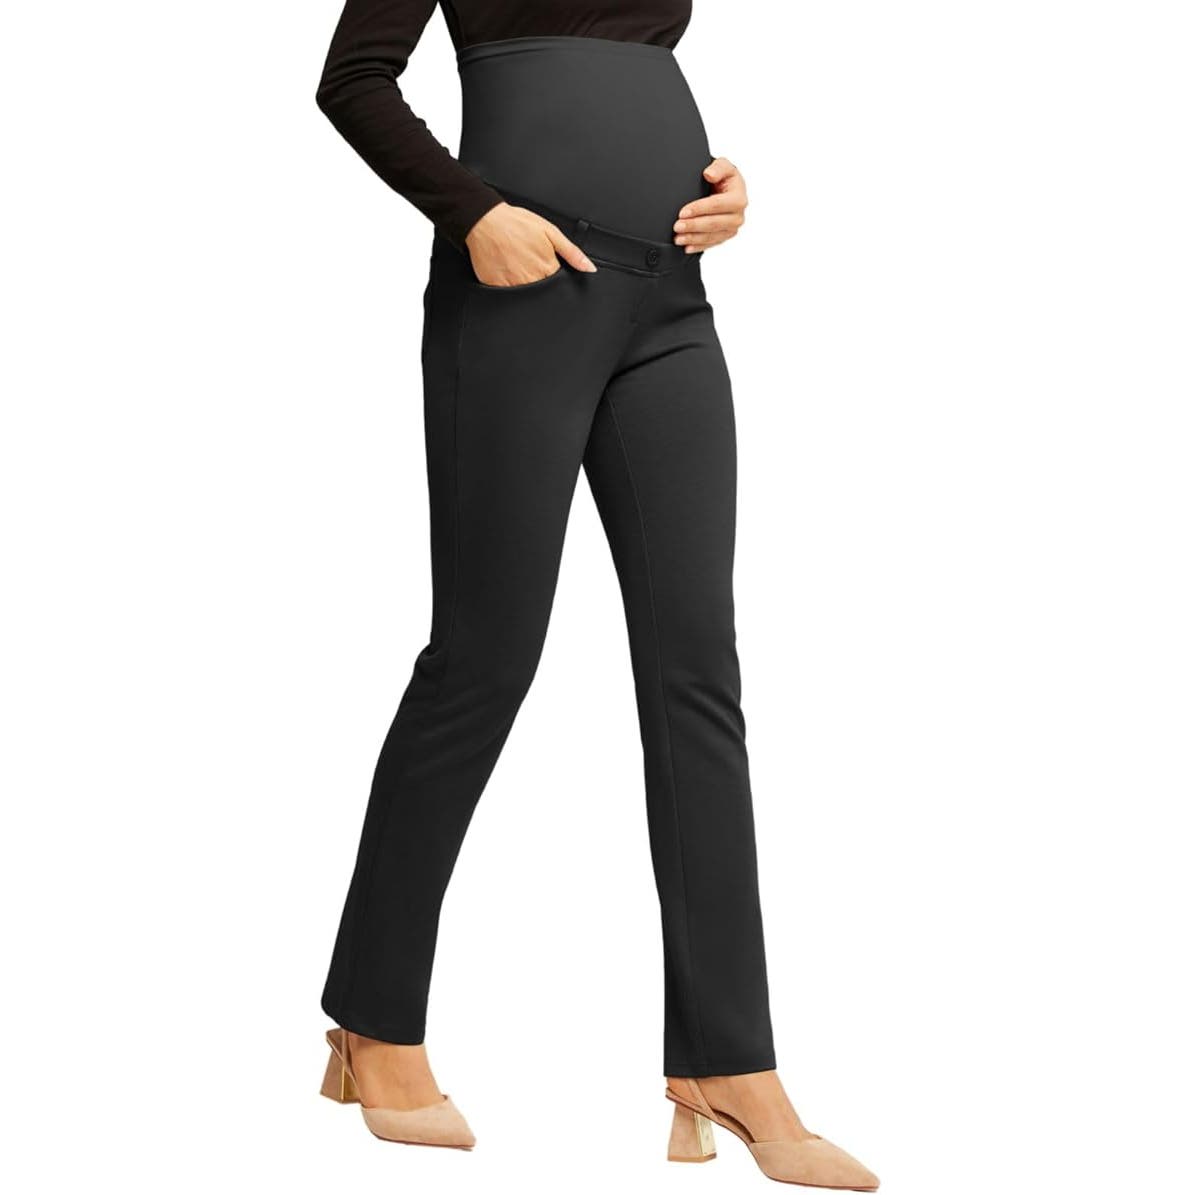 Maacie Maternity Stretchy Straight Legs High Waist Yoga Pants w/ Pockets, XL